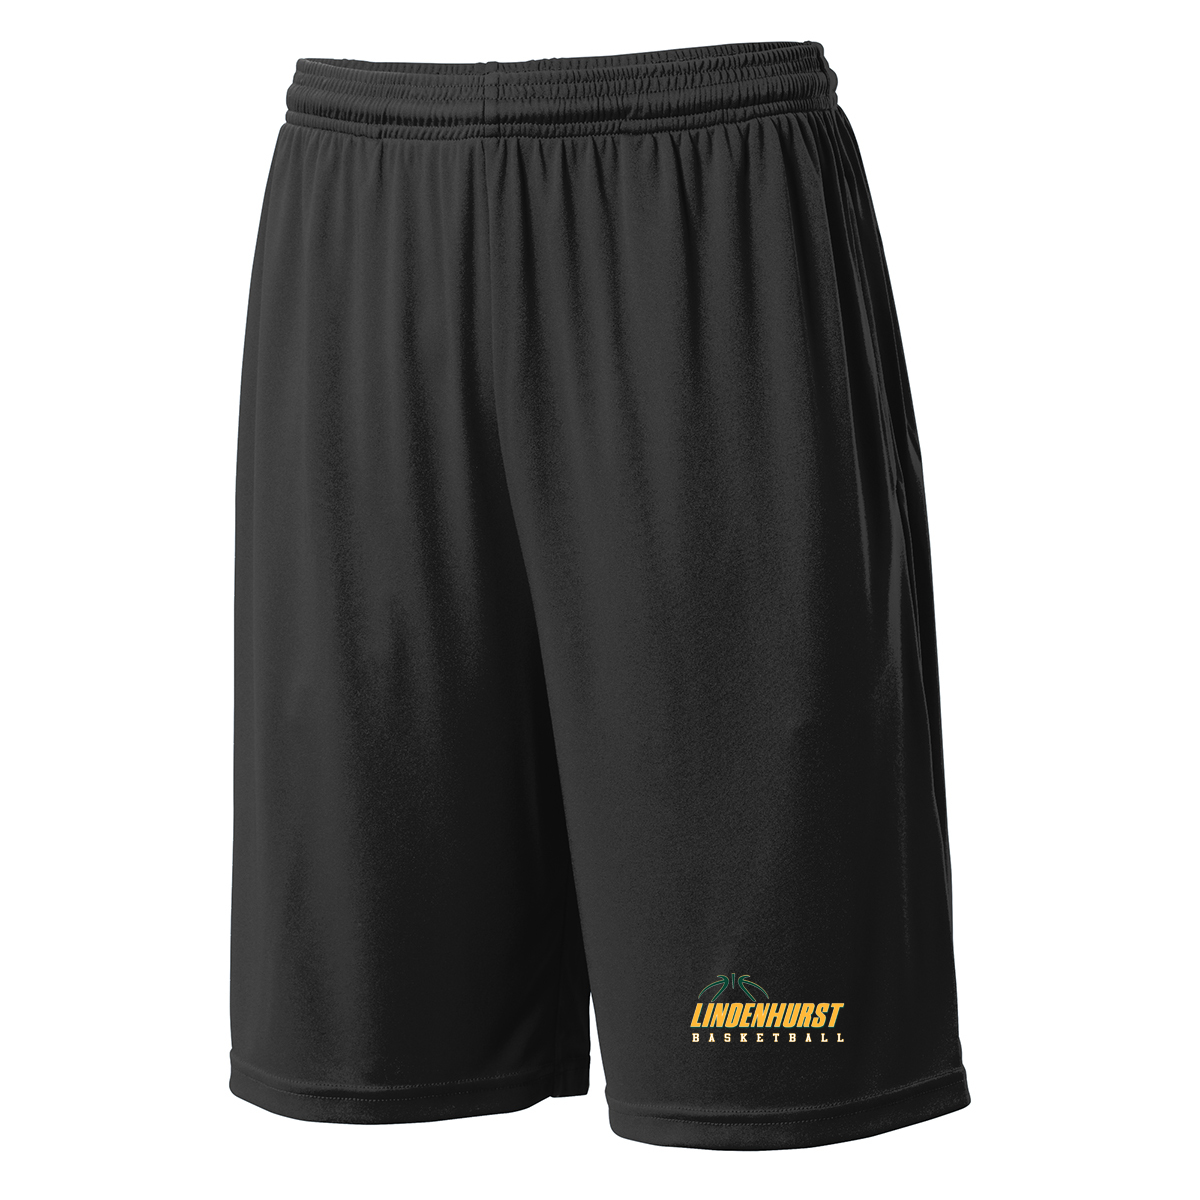 Lindenhurst Basketball Shorts